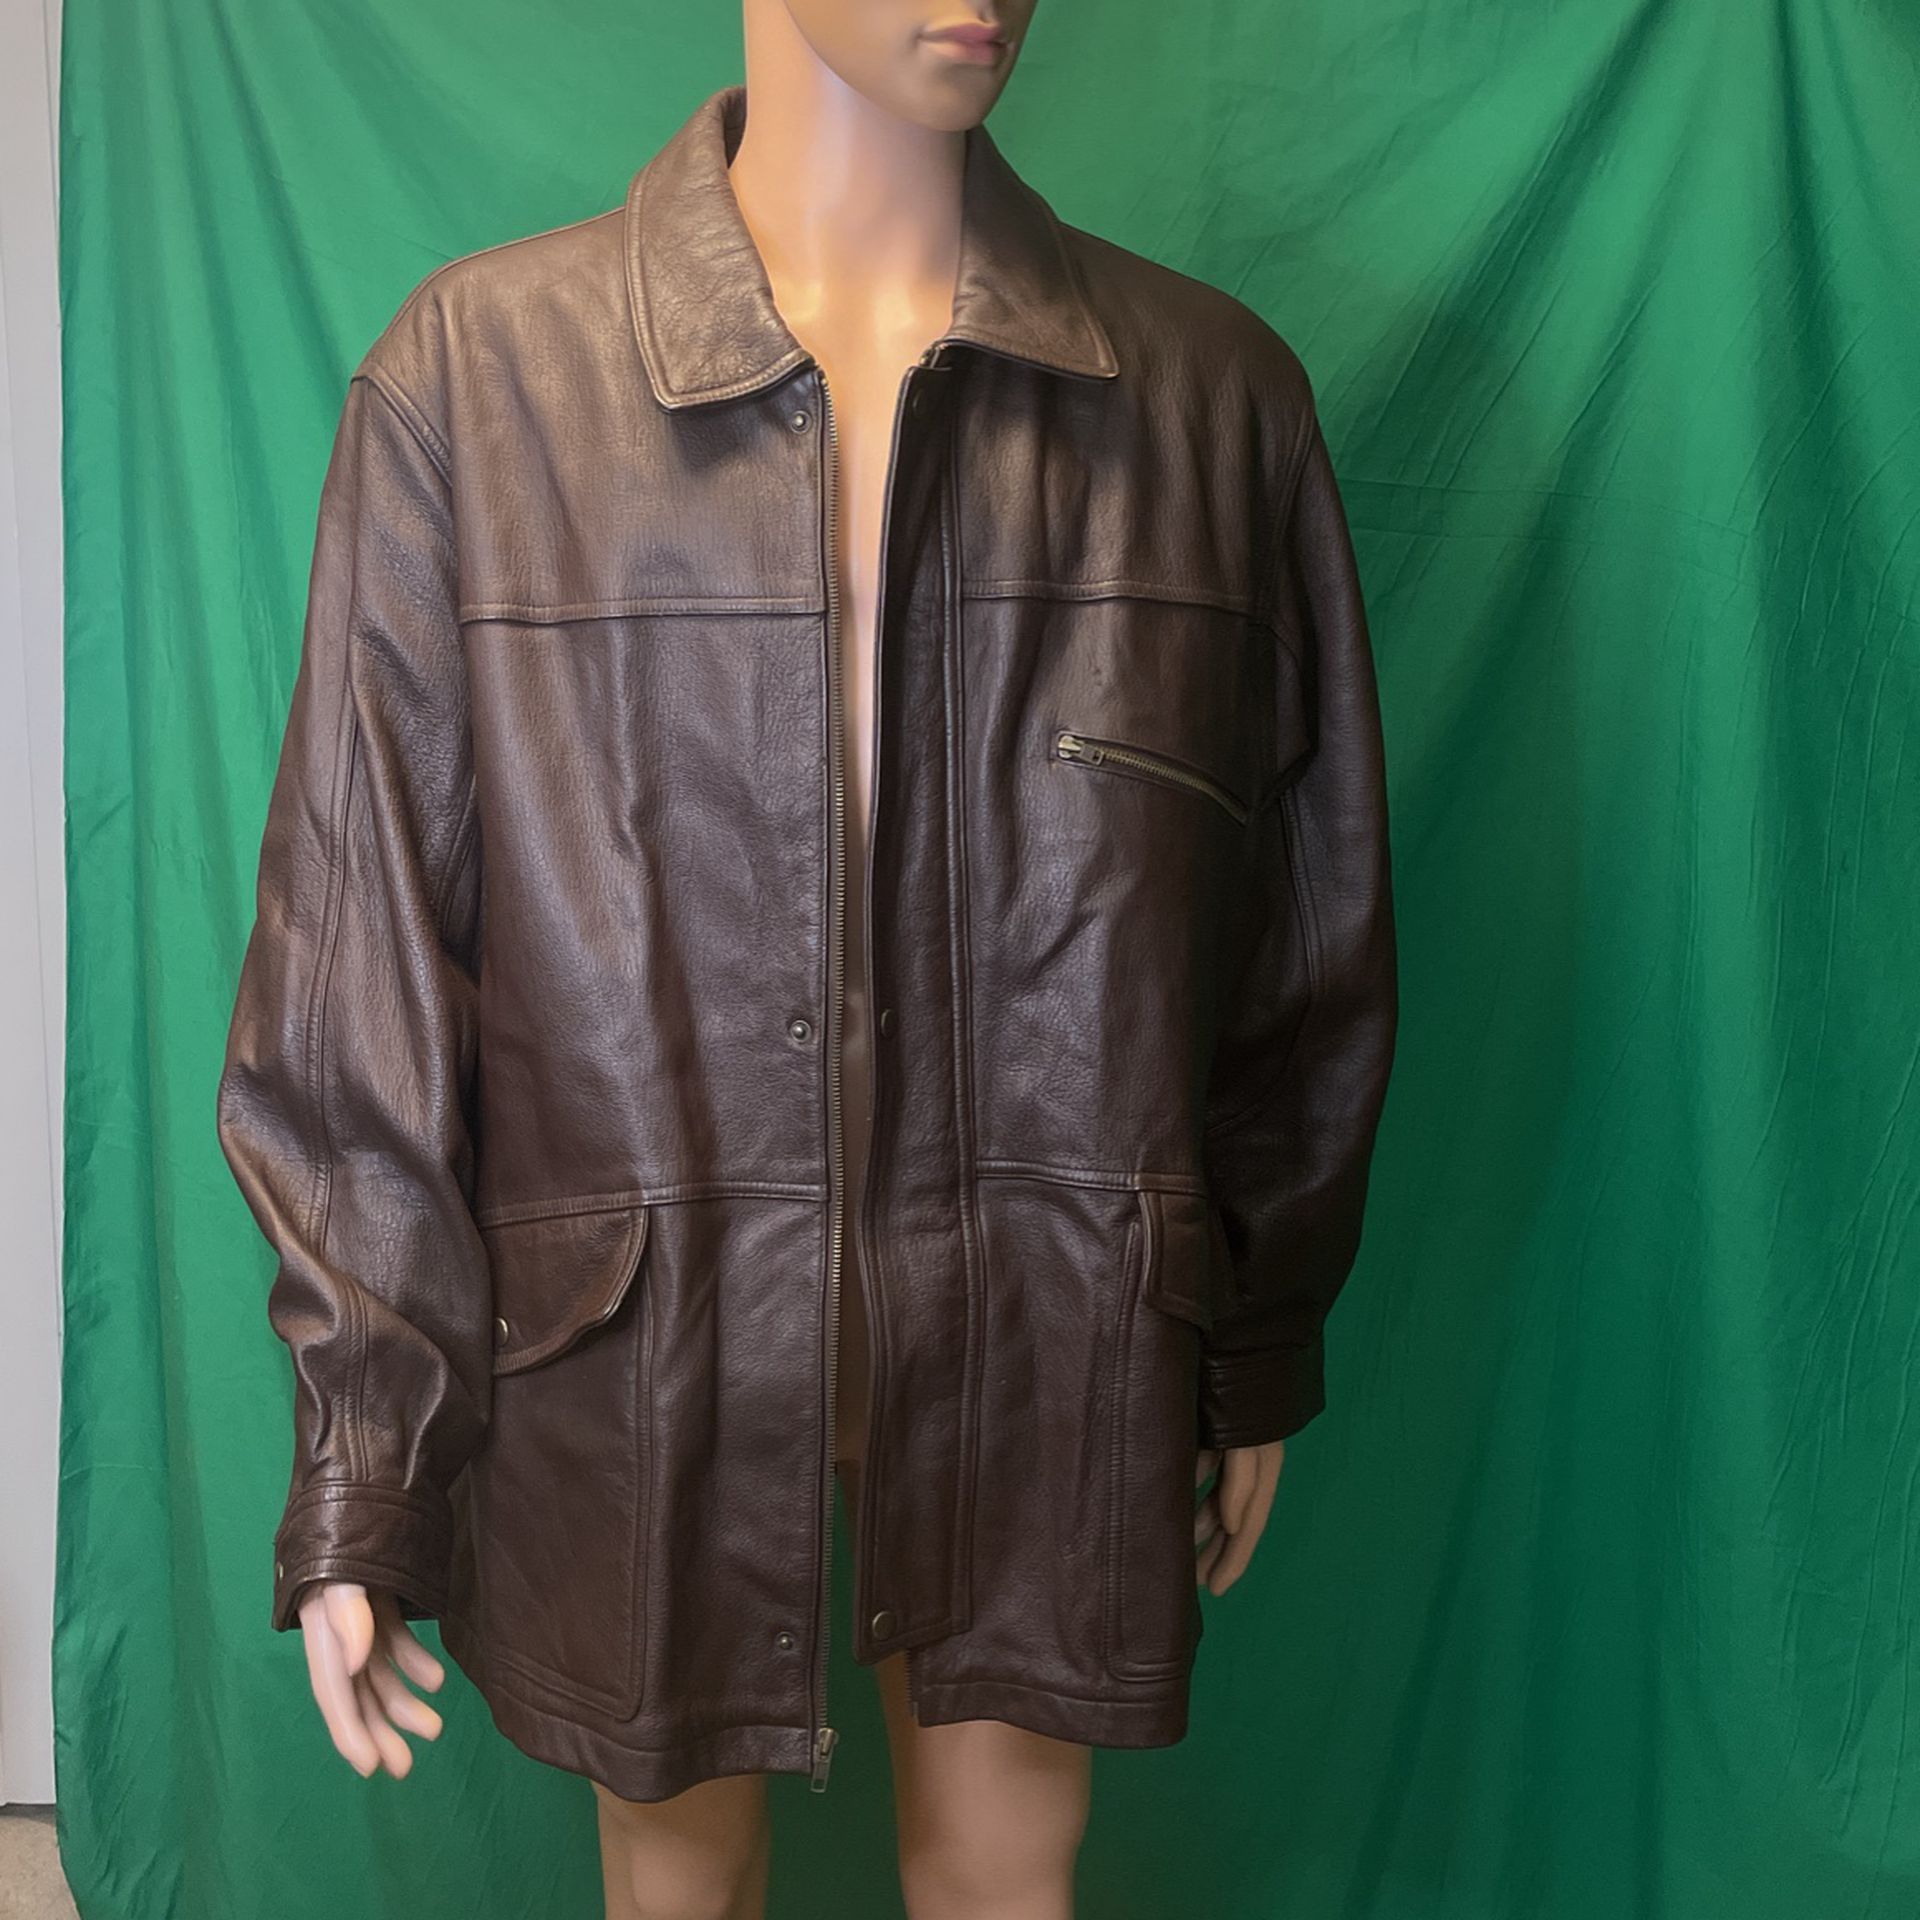 Gianni Ferrara Vintage Leather Jacket Mens XXL